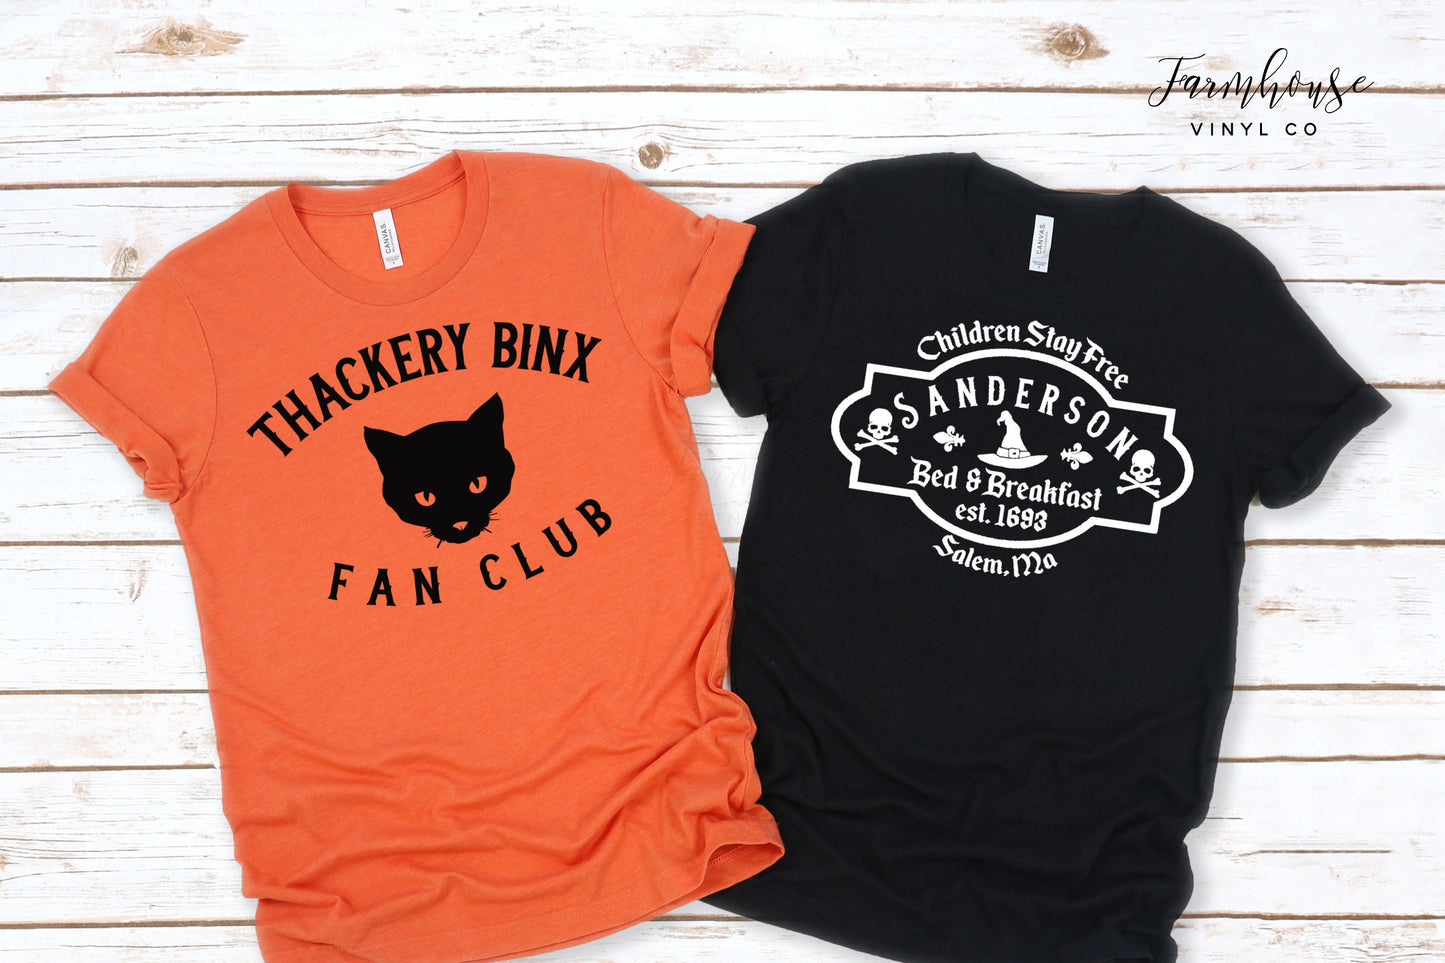 Hocus Pocus Witch Movie T-Shirt / Halloween Shirts / Fall Shirts / Sanderson Sister Shirts / Group Friends Family Shirt / Black Cat Shirt - Farmhouse Vinyl Co